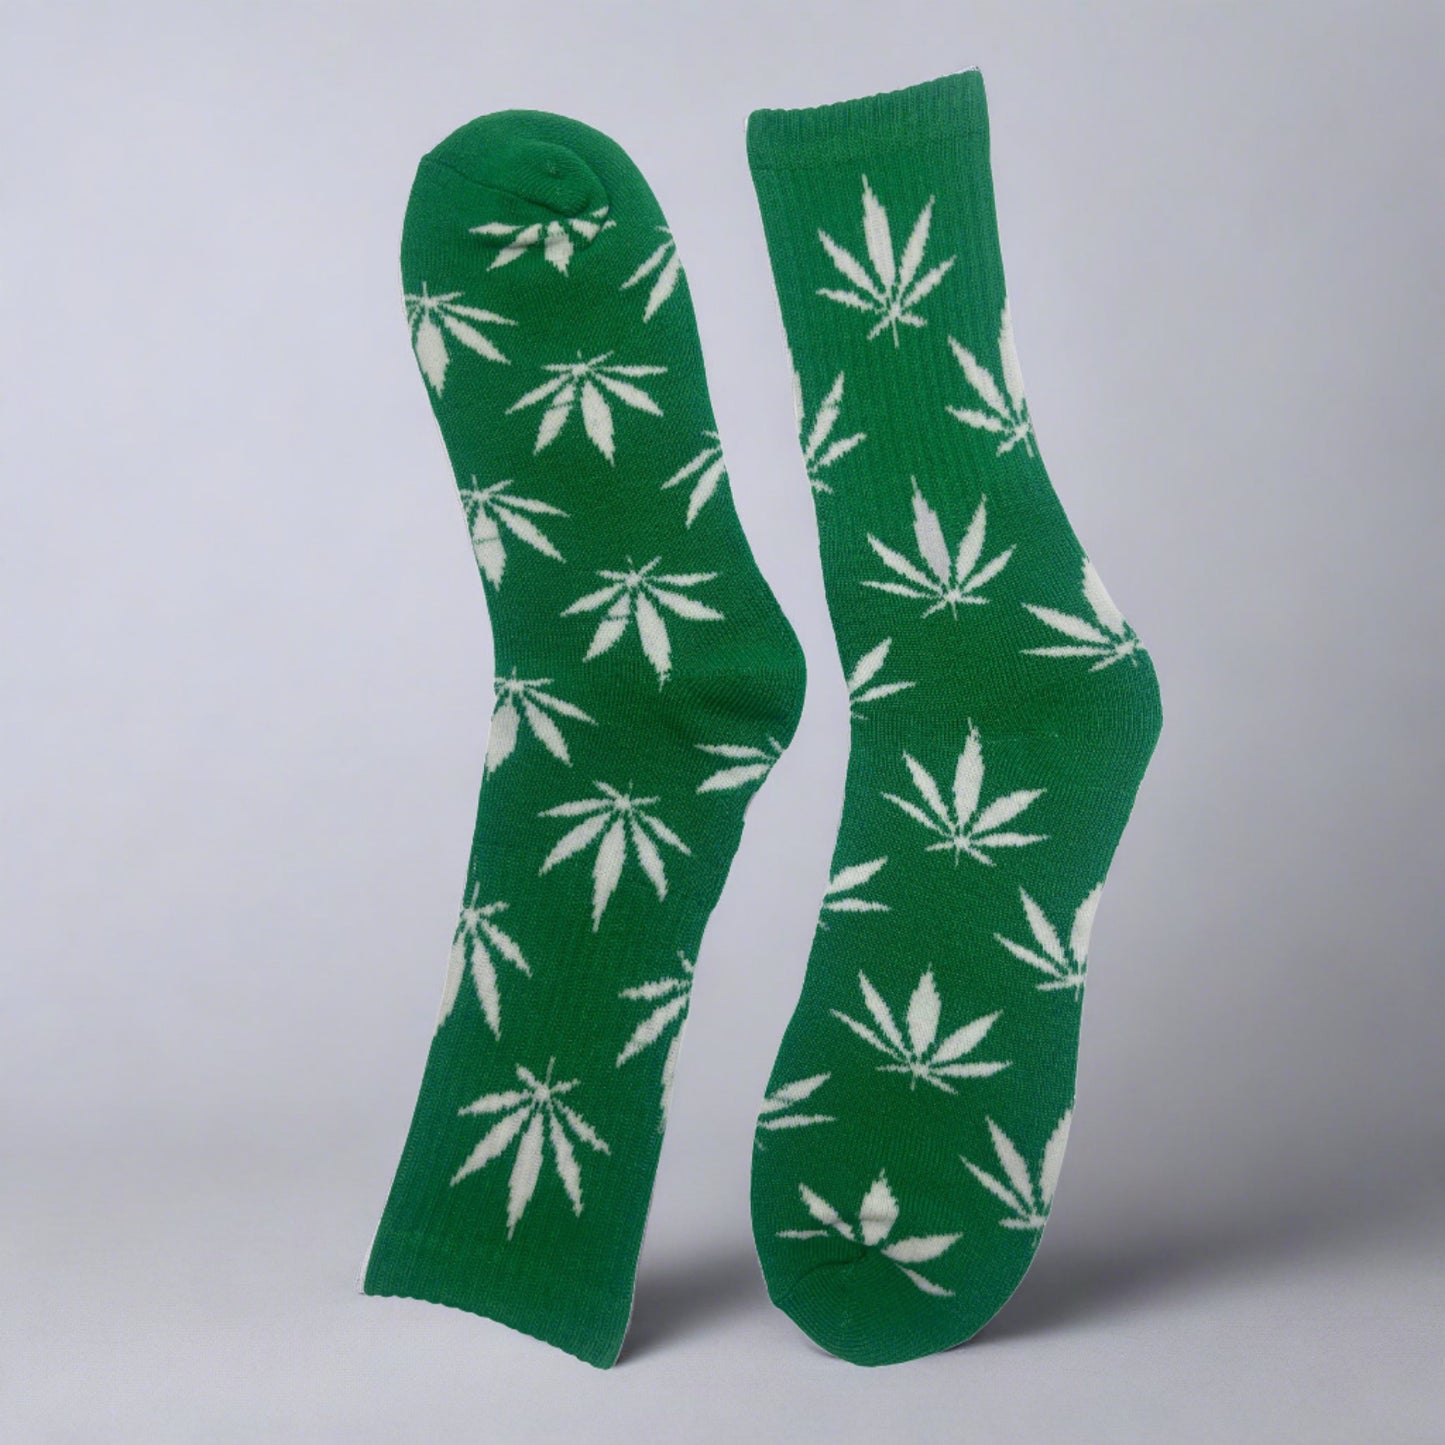 green crew socks with white marijuana leaves